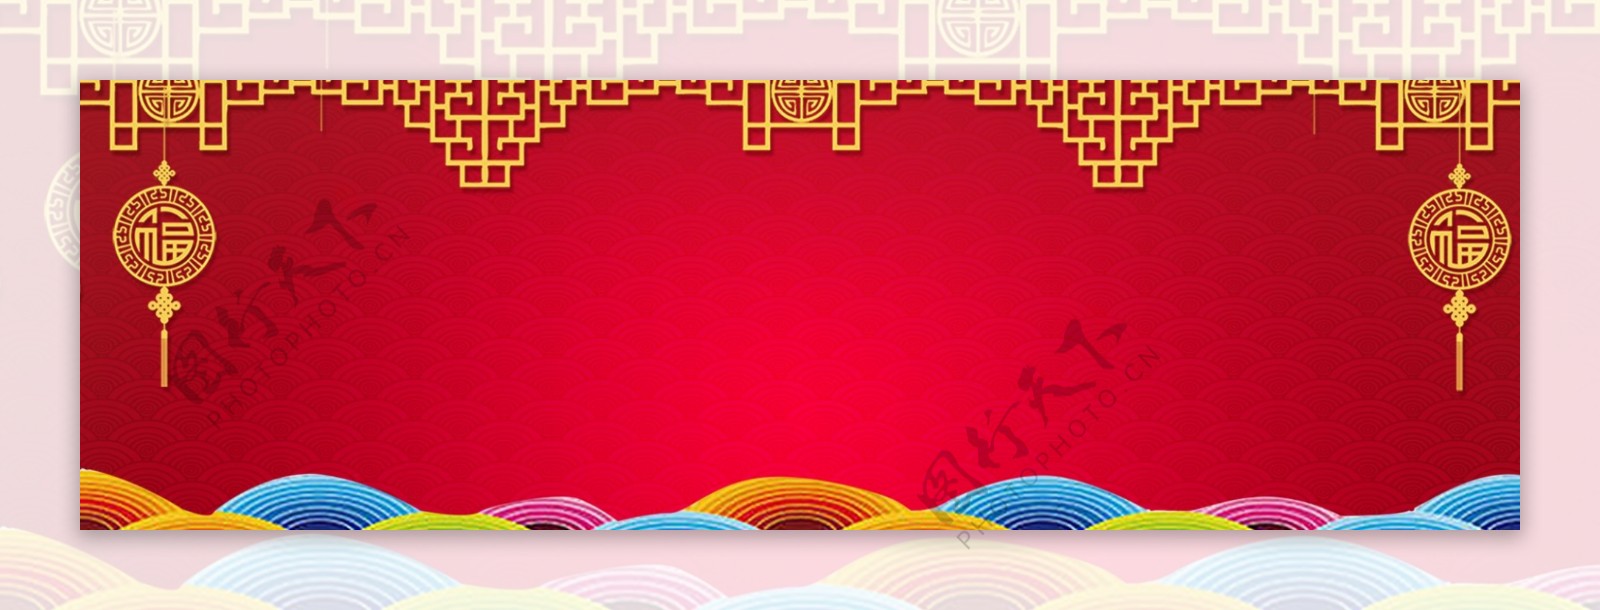 腊八年货节中国风新年节日banner背景